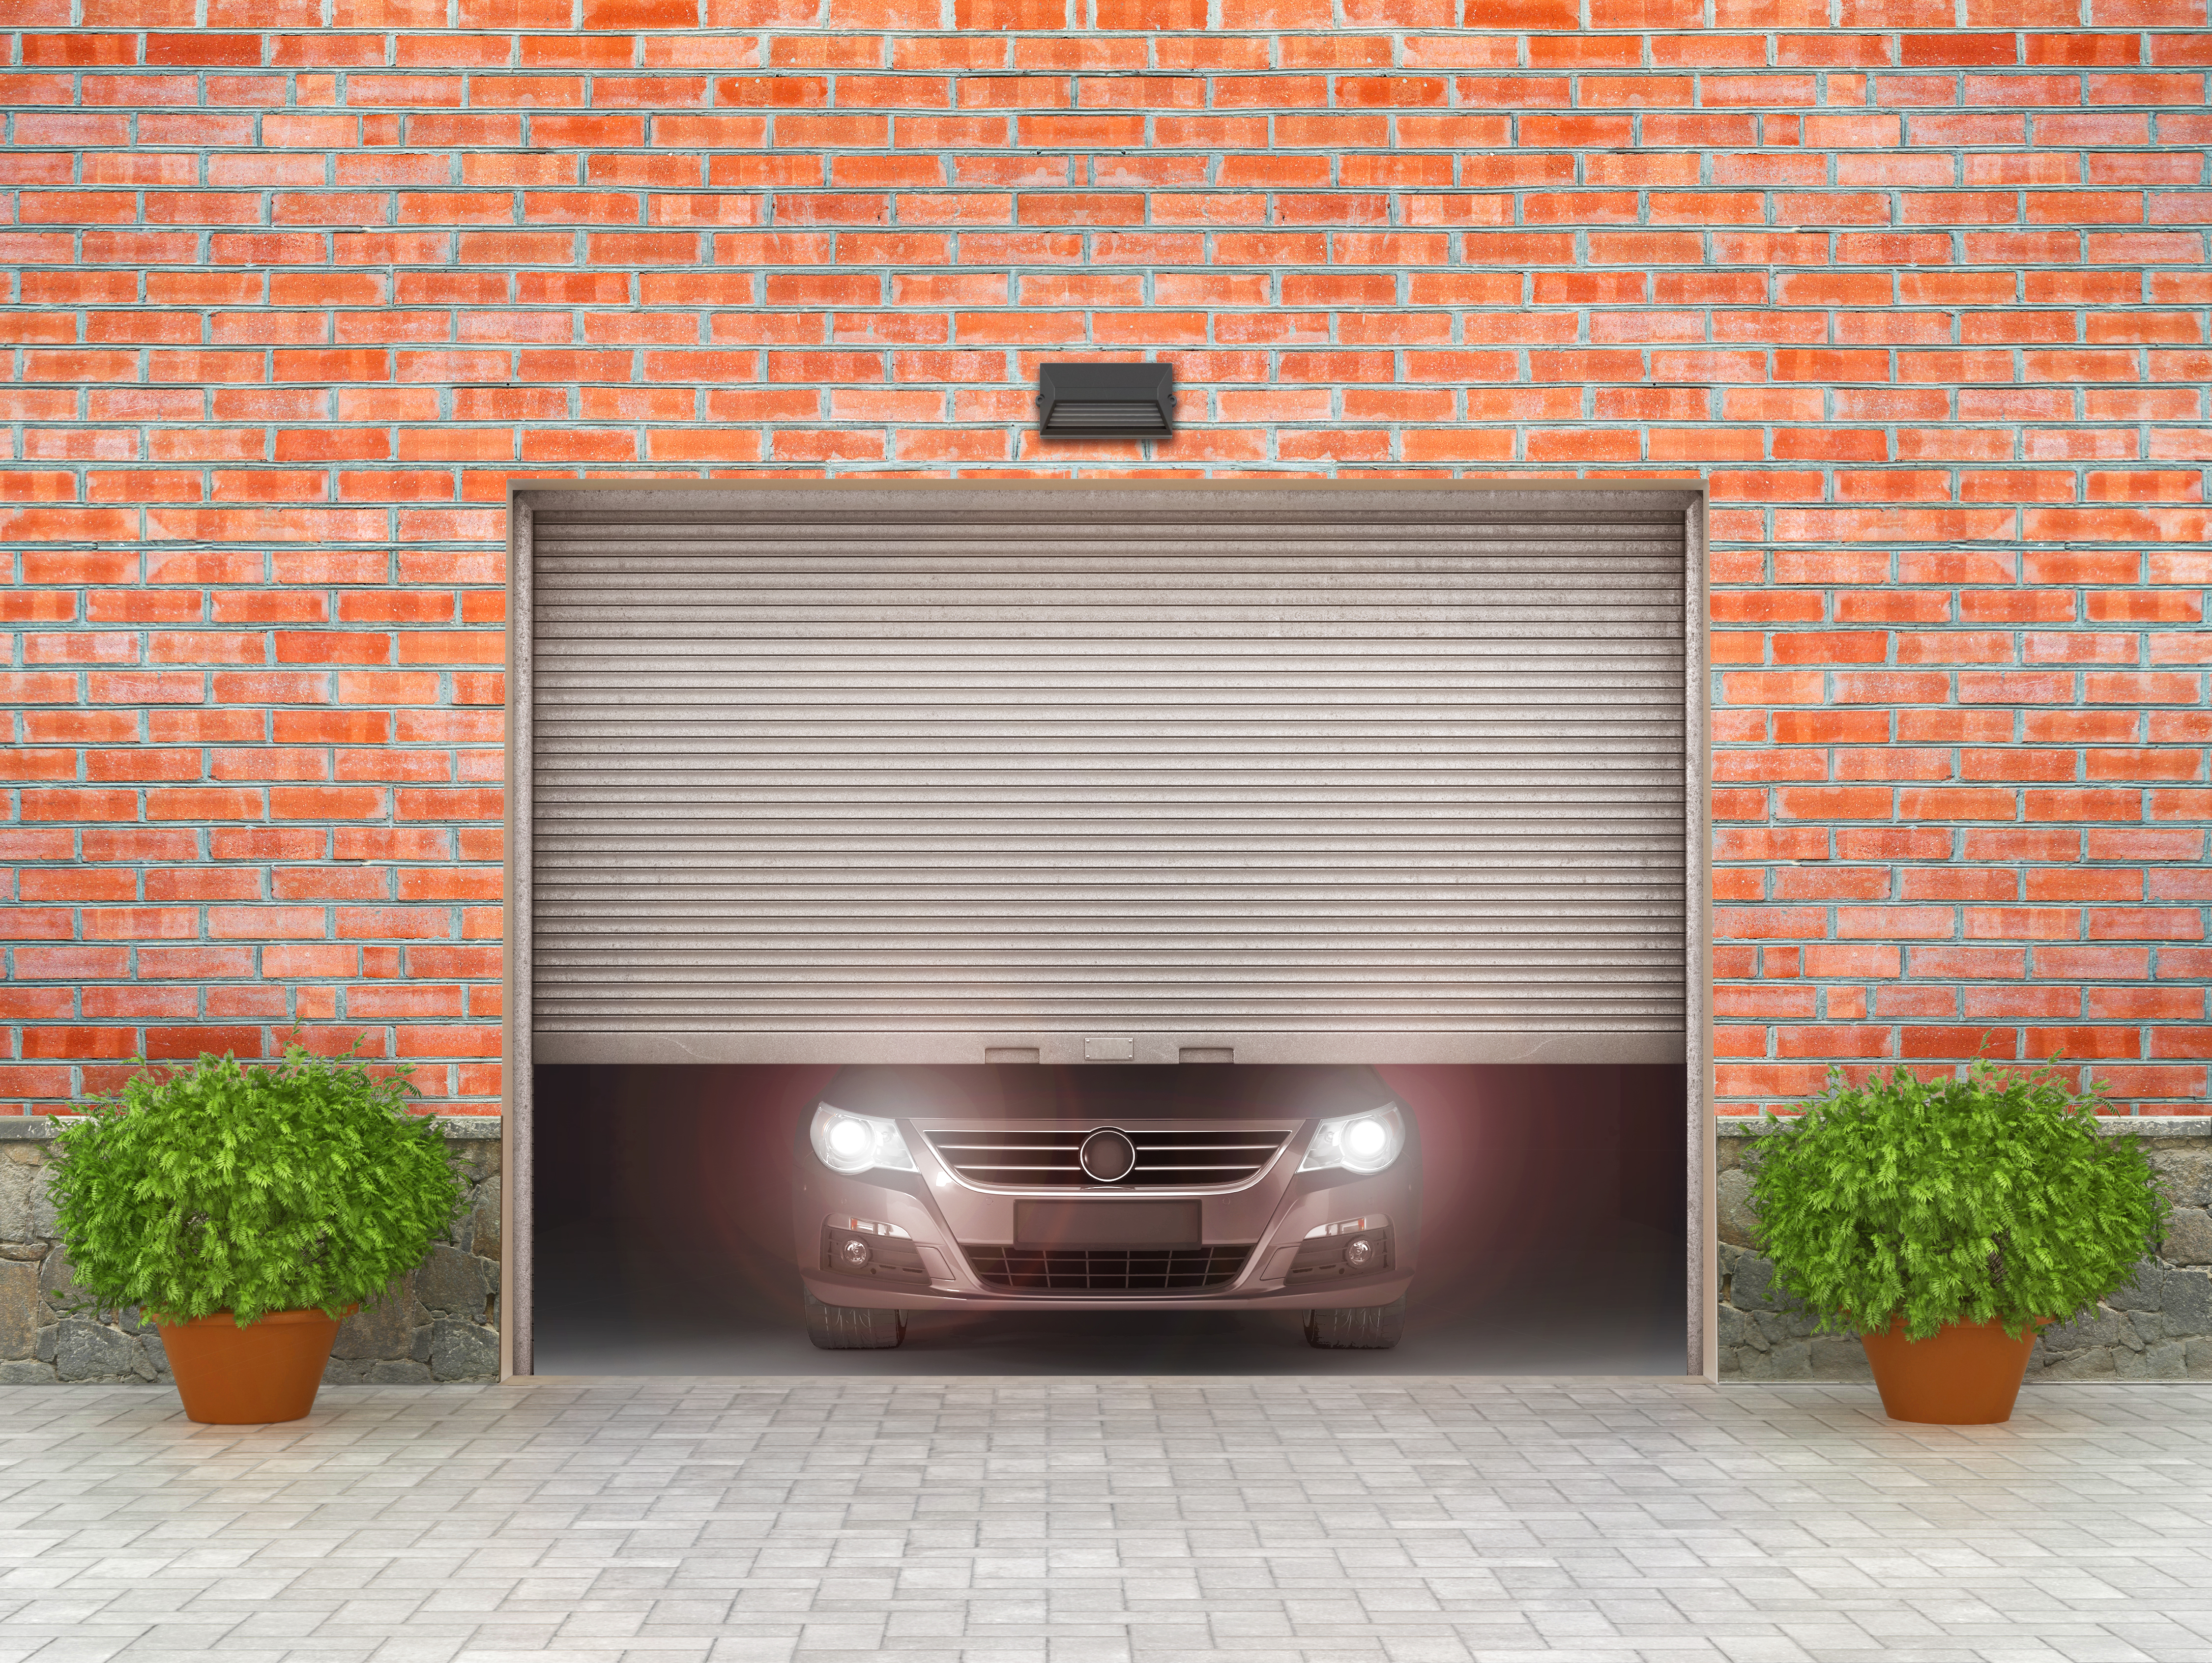 Garage door opening with a car behind it